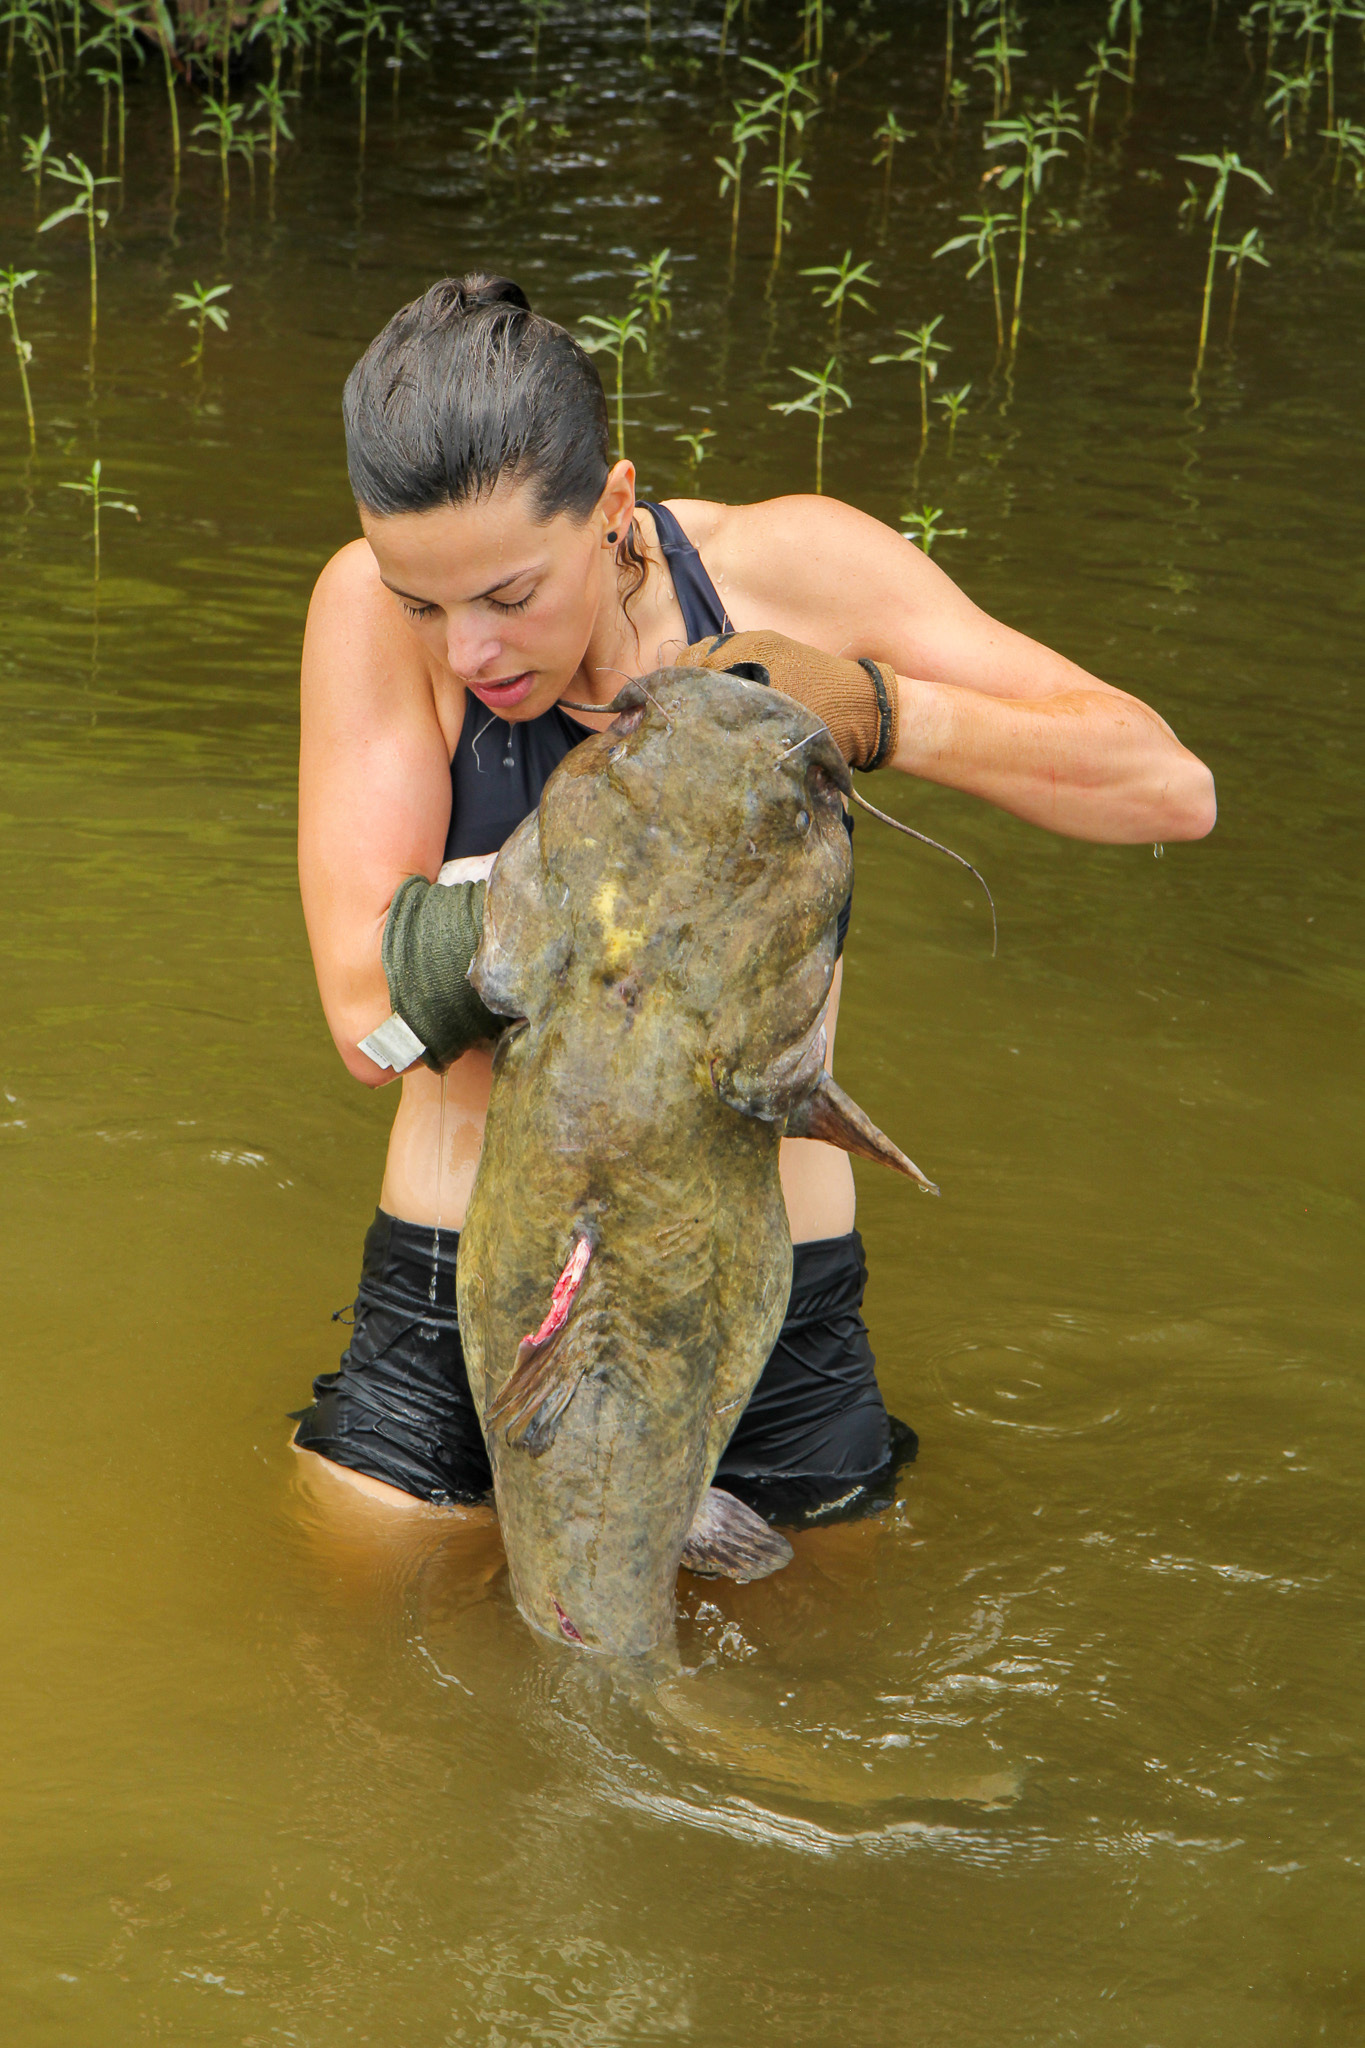 Natalie Krebs holds up flathead catfish she noodled in Kentucky.